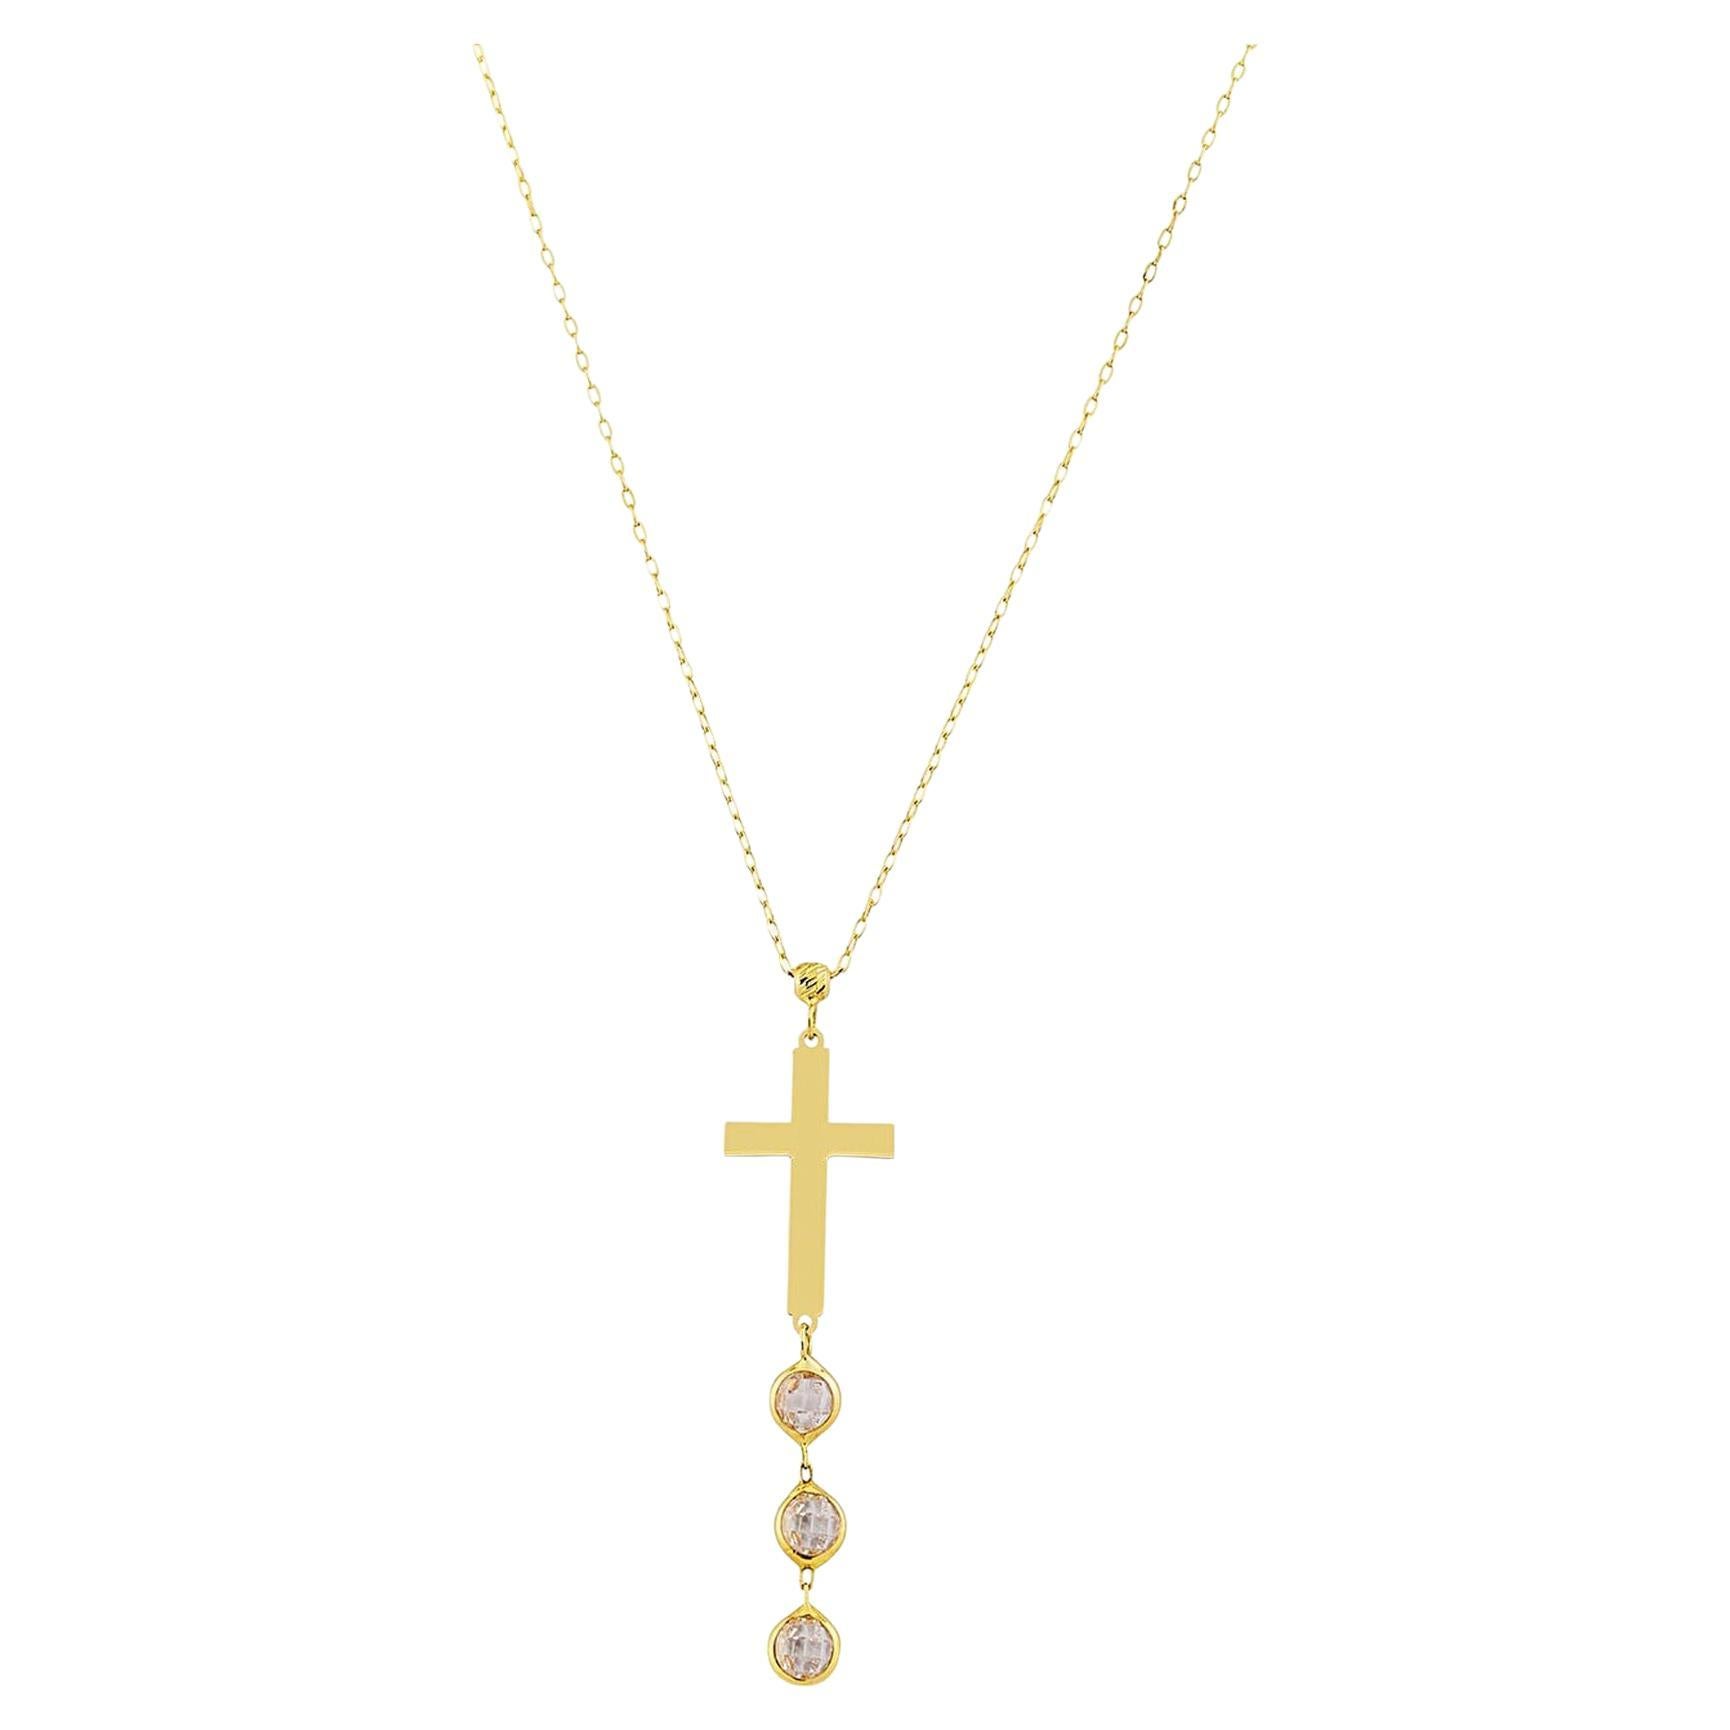 14 Karat Gold Cross Shaped Charm Necklace, Cross Pendant Necklace